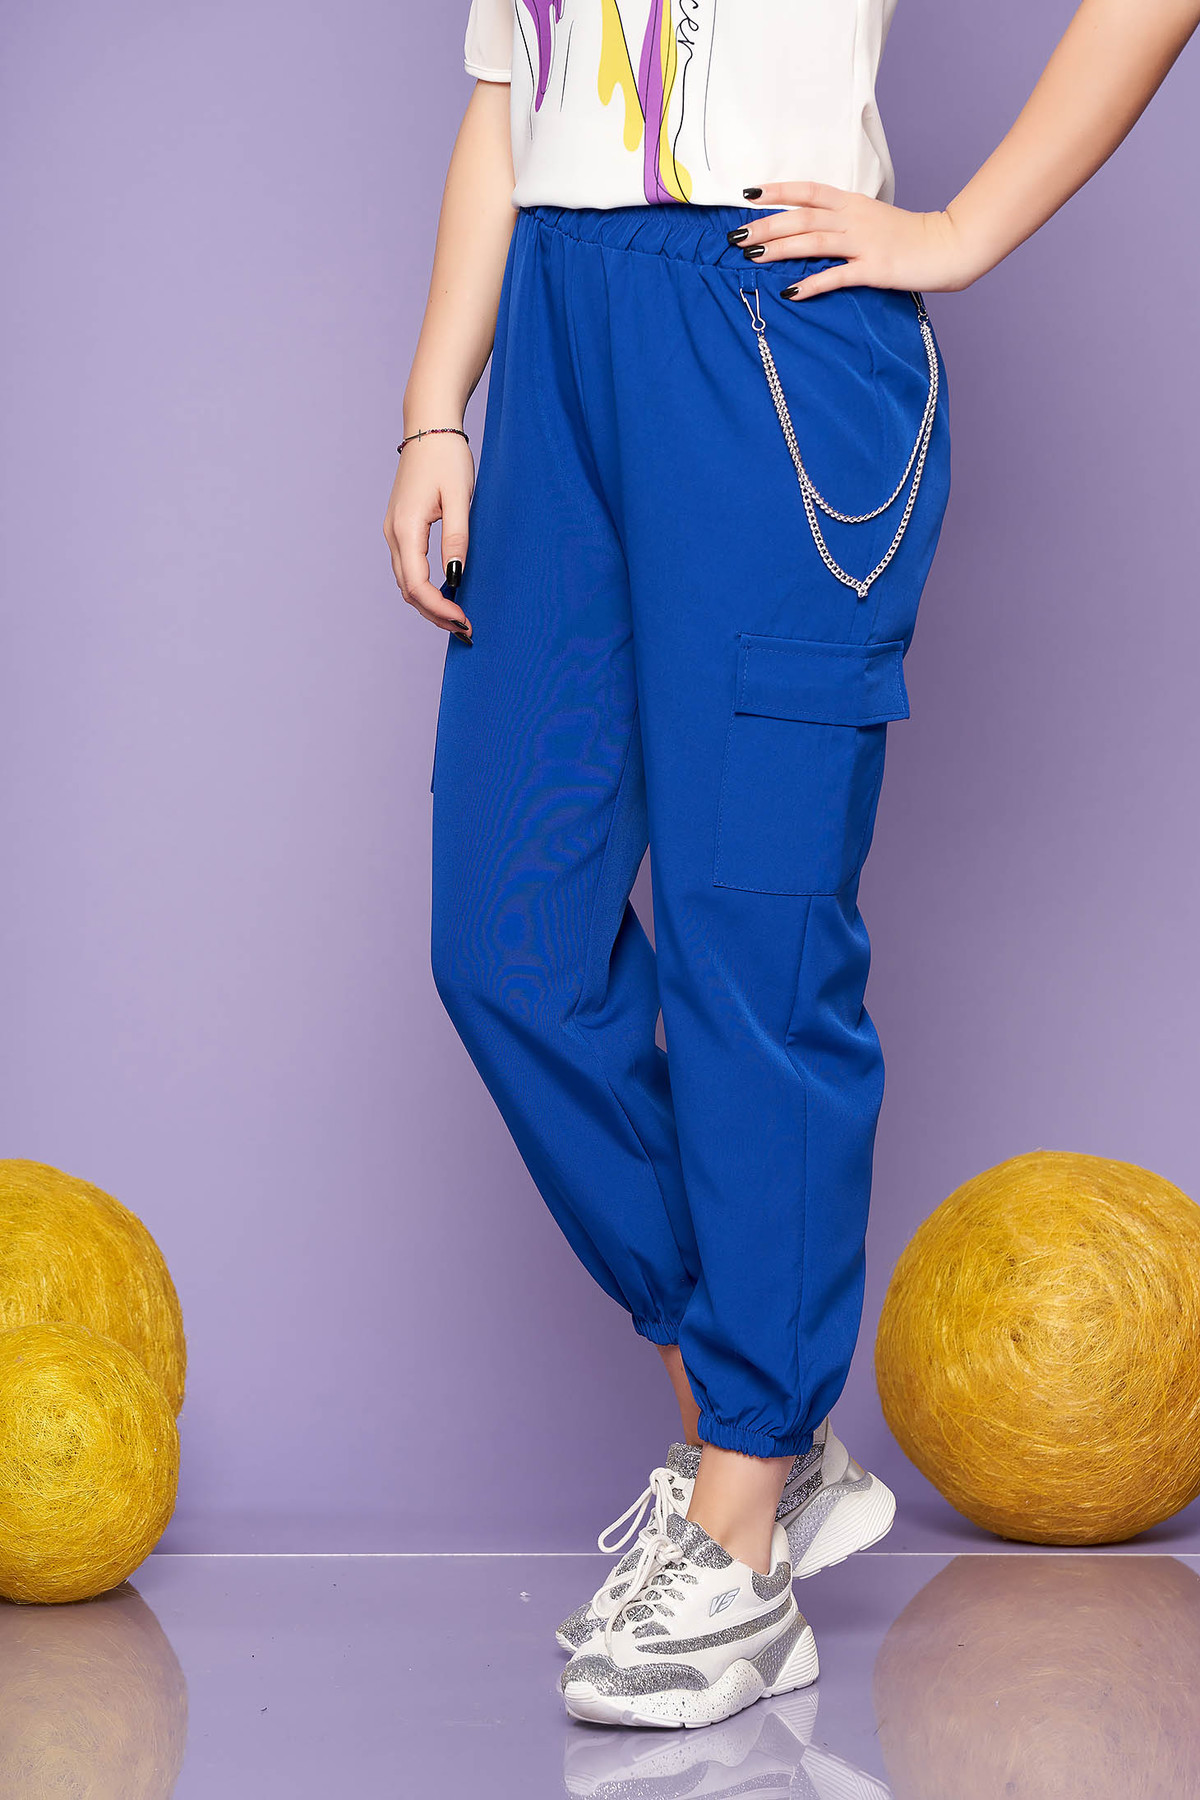 Pantaloni SunShine albastri casual 3/4 cu talie inalta buzunare laterale cu accesoriu inclus